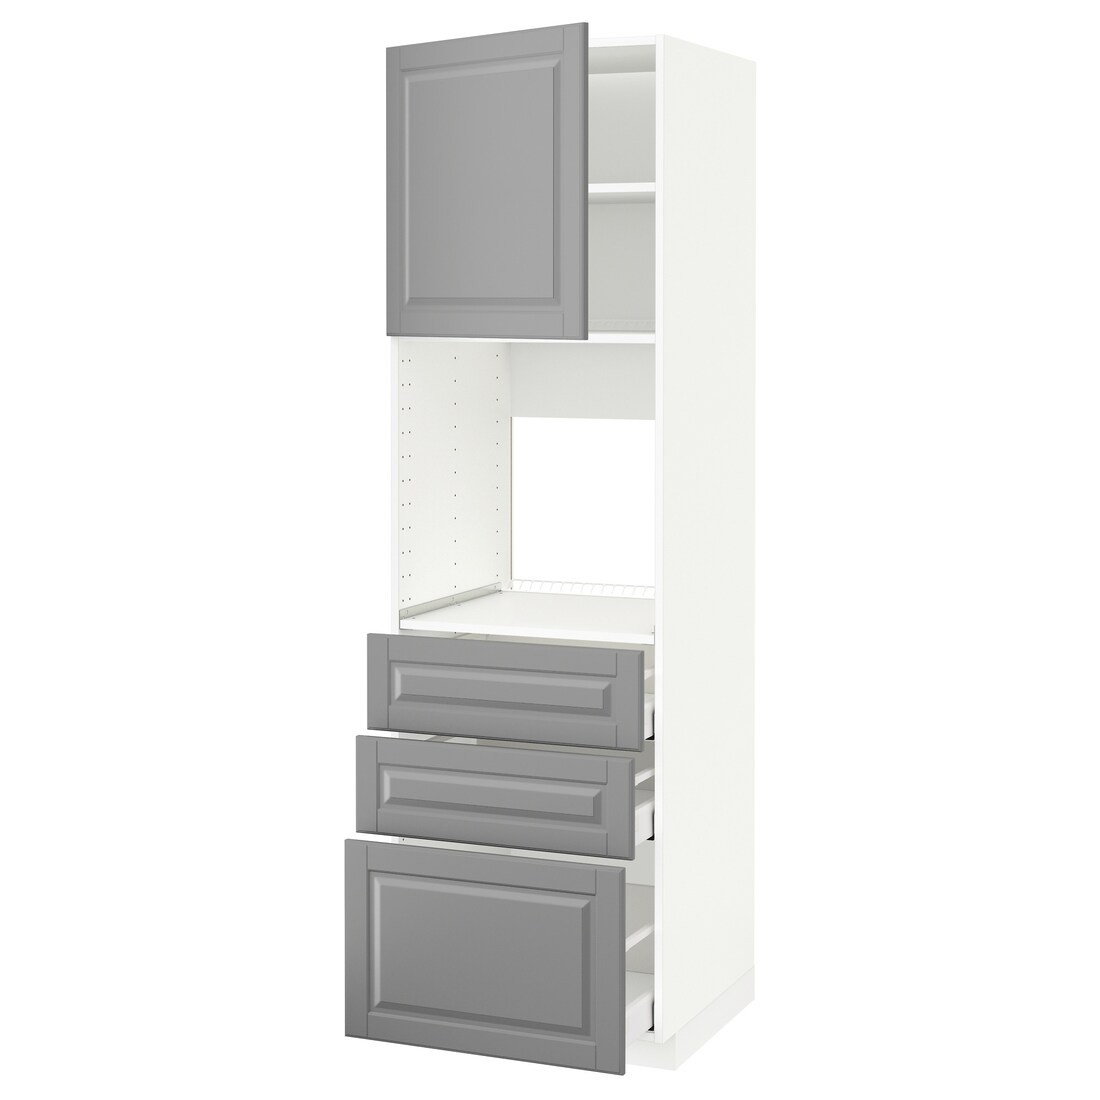 METOD МЕТОД / MAXIMERA МАКСИМЕРА Высокий шкаф для духовки, белый / Bodbyn серый, 60x60x200 см